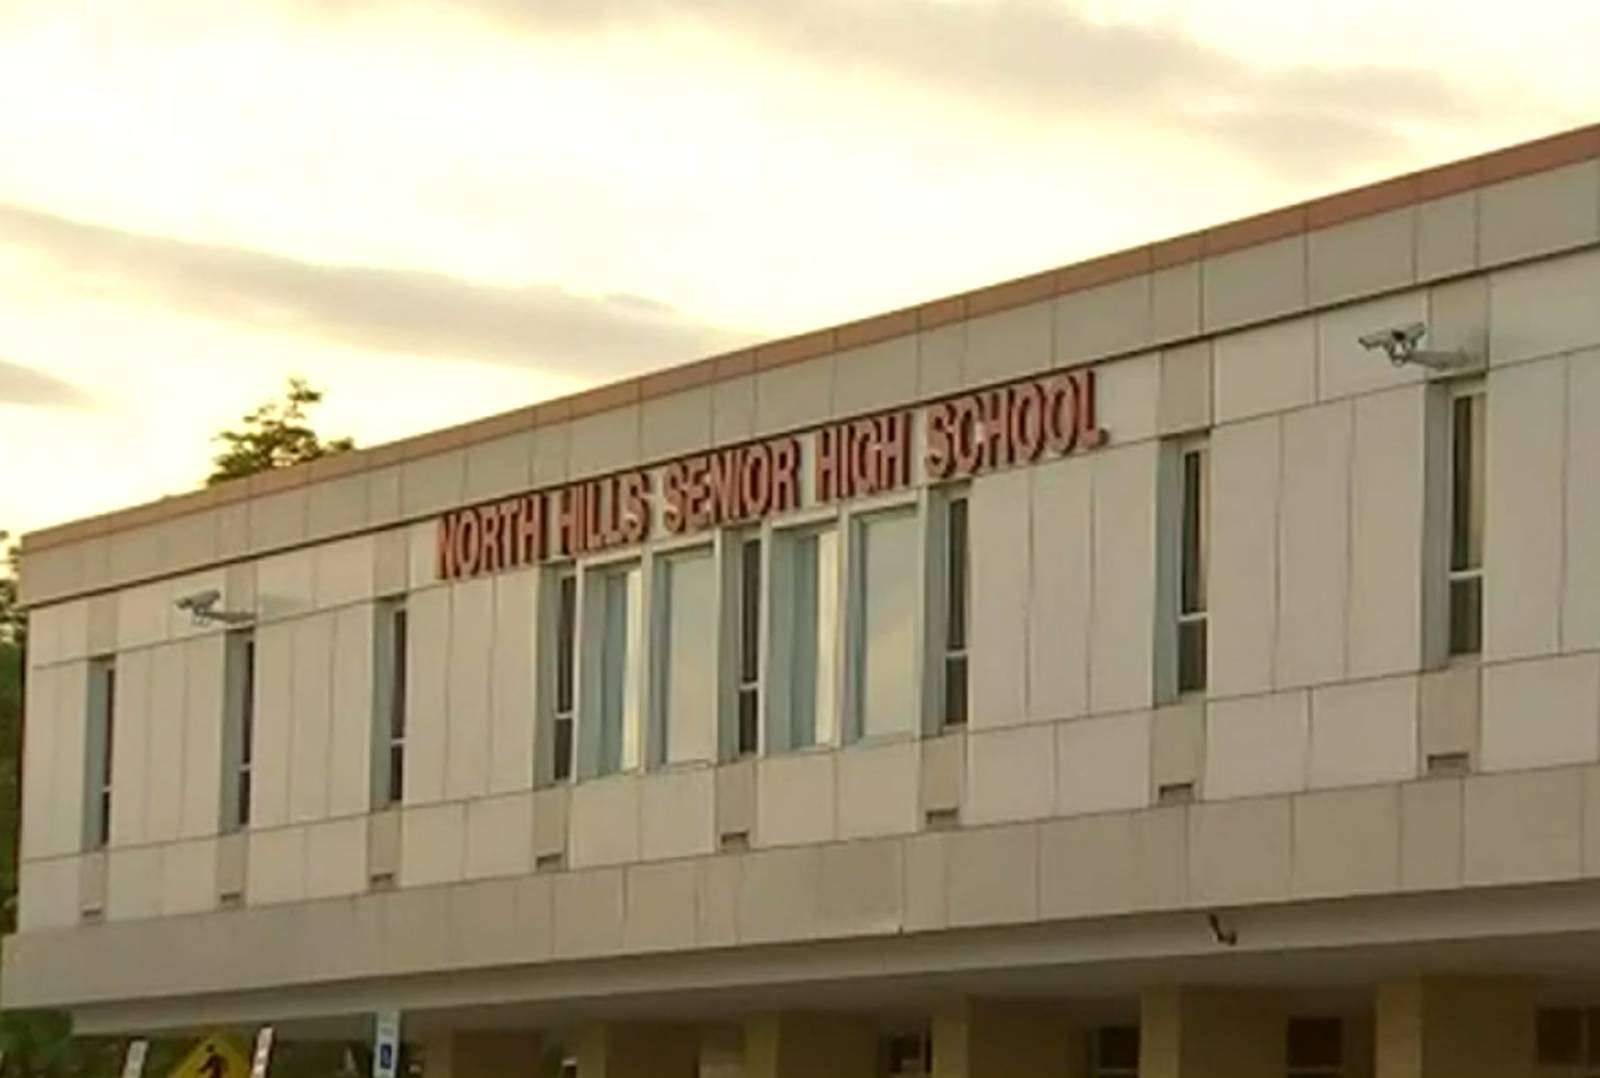 Latest North Hills school board resolution would eliminate mascot logo